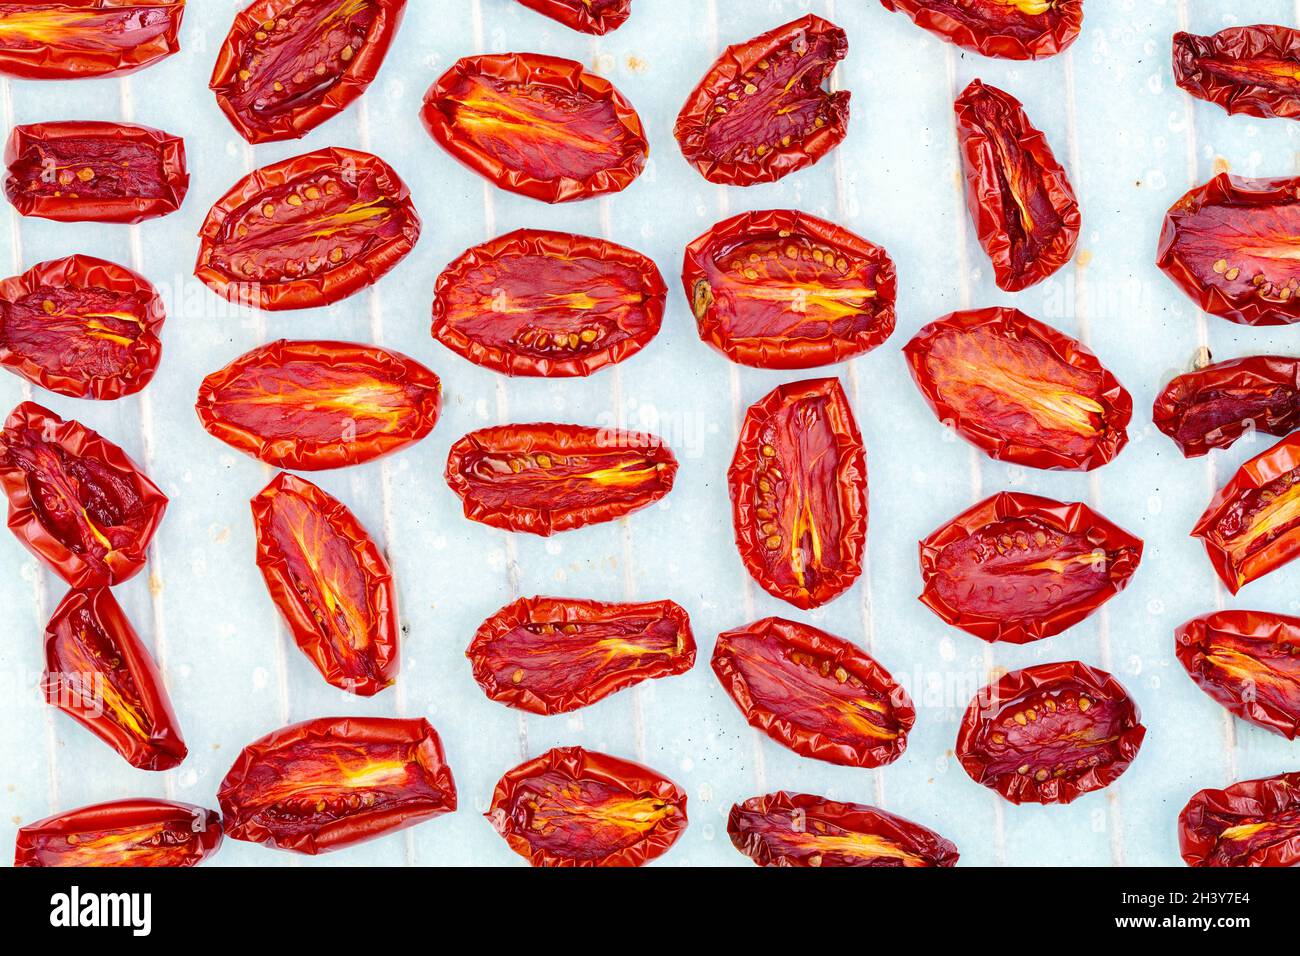 Dried tomato halves. Stock Photo